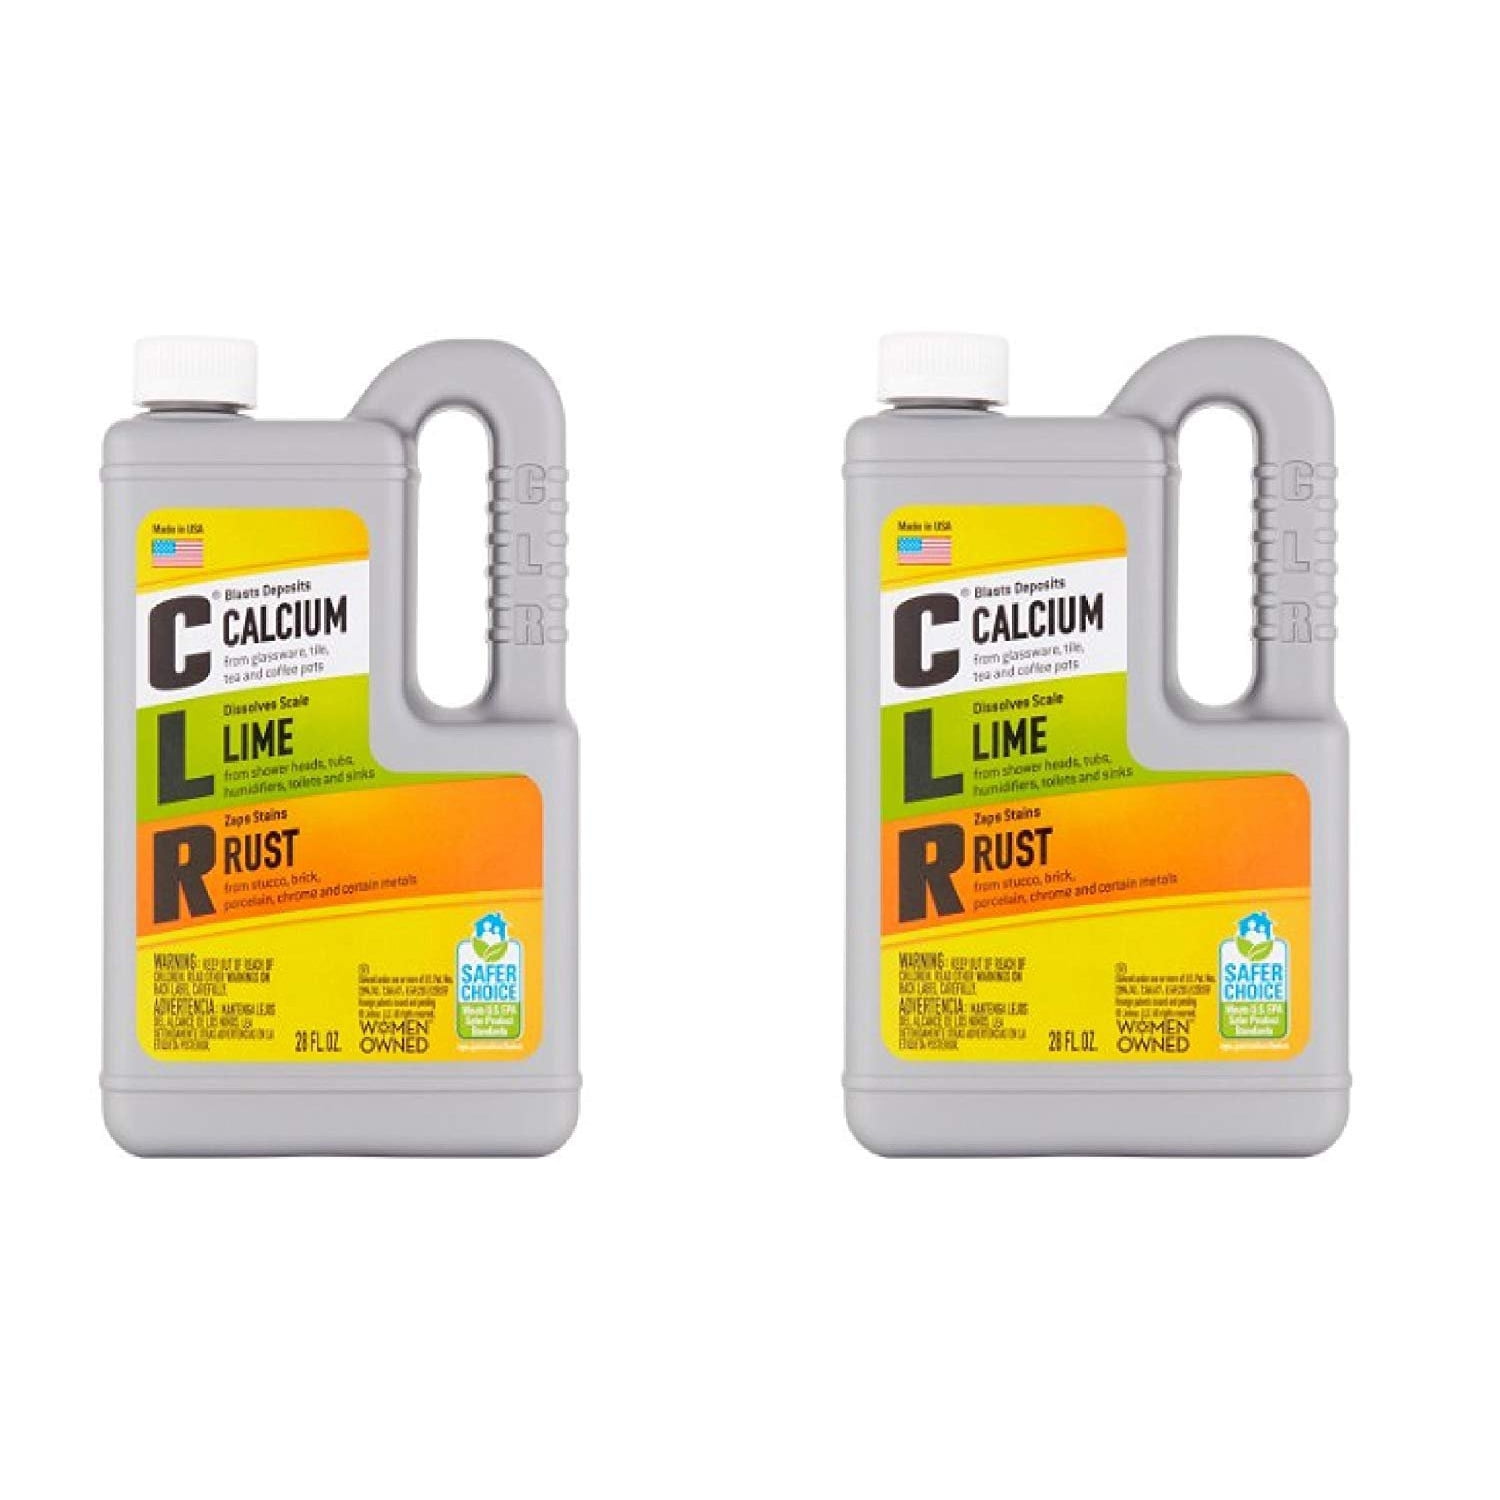 CLR Calcium Lime & Rust Remover - 28 fl oz jug